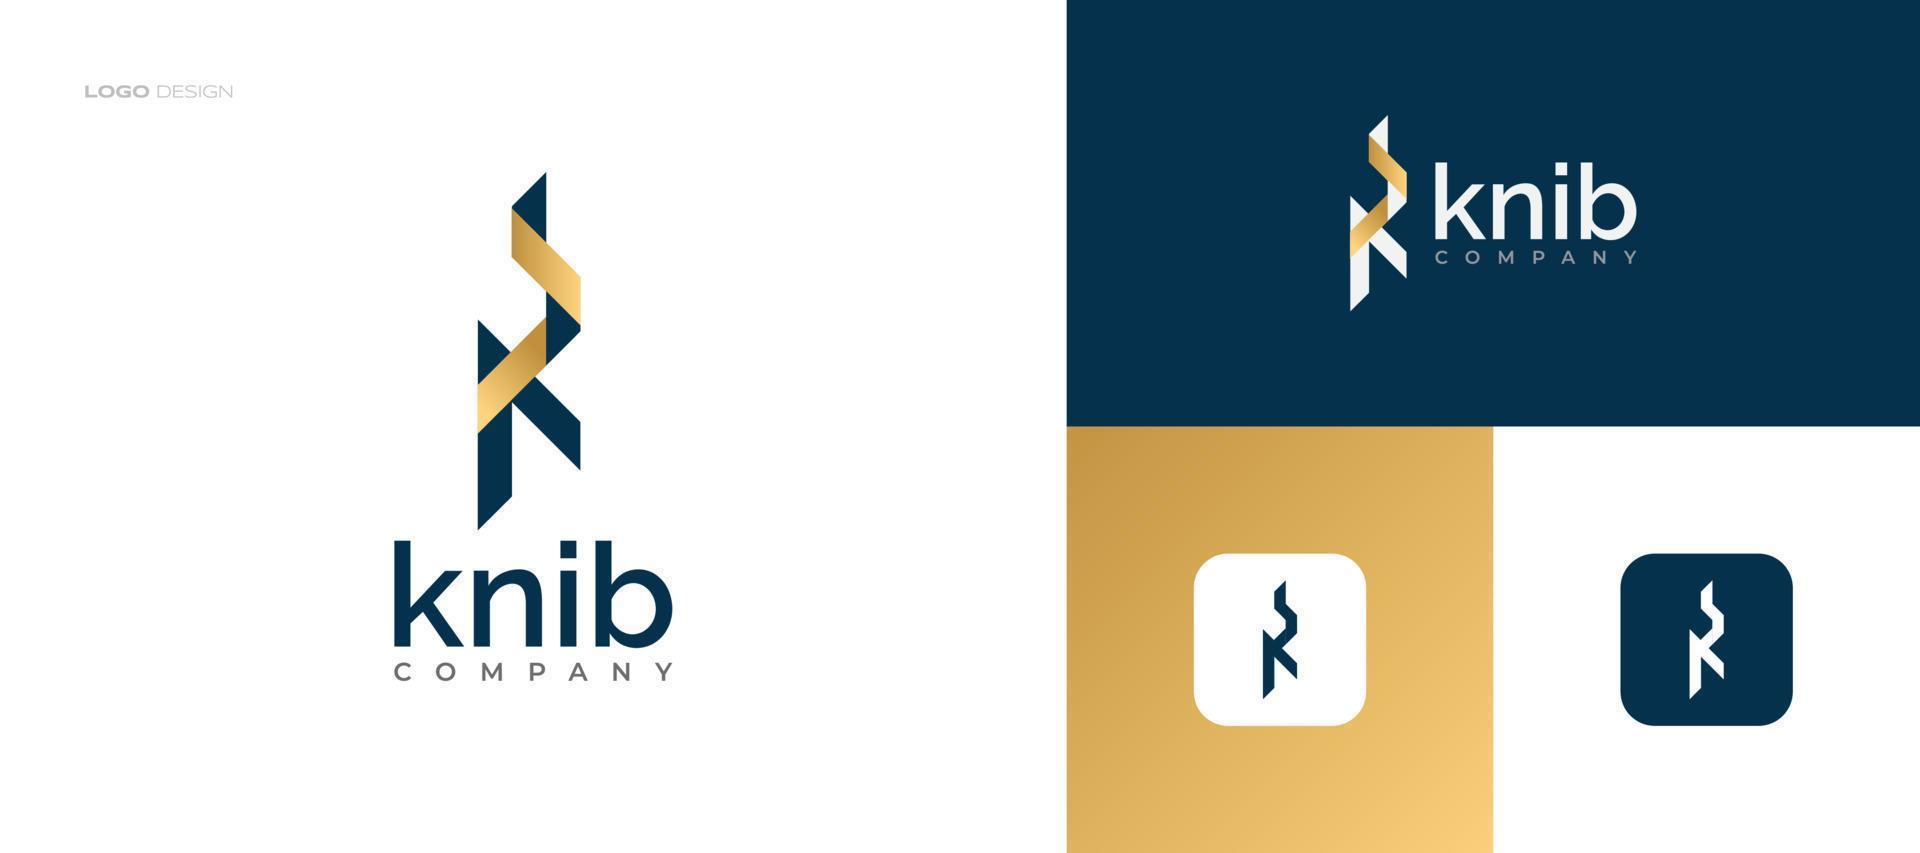 design de logotipo letra k abstrato e luxuoso em azul e ouro para negócios e identidade de marca vetor